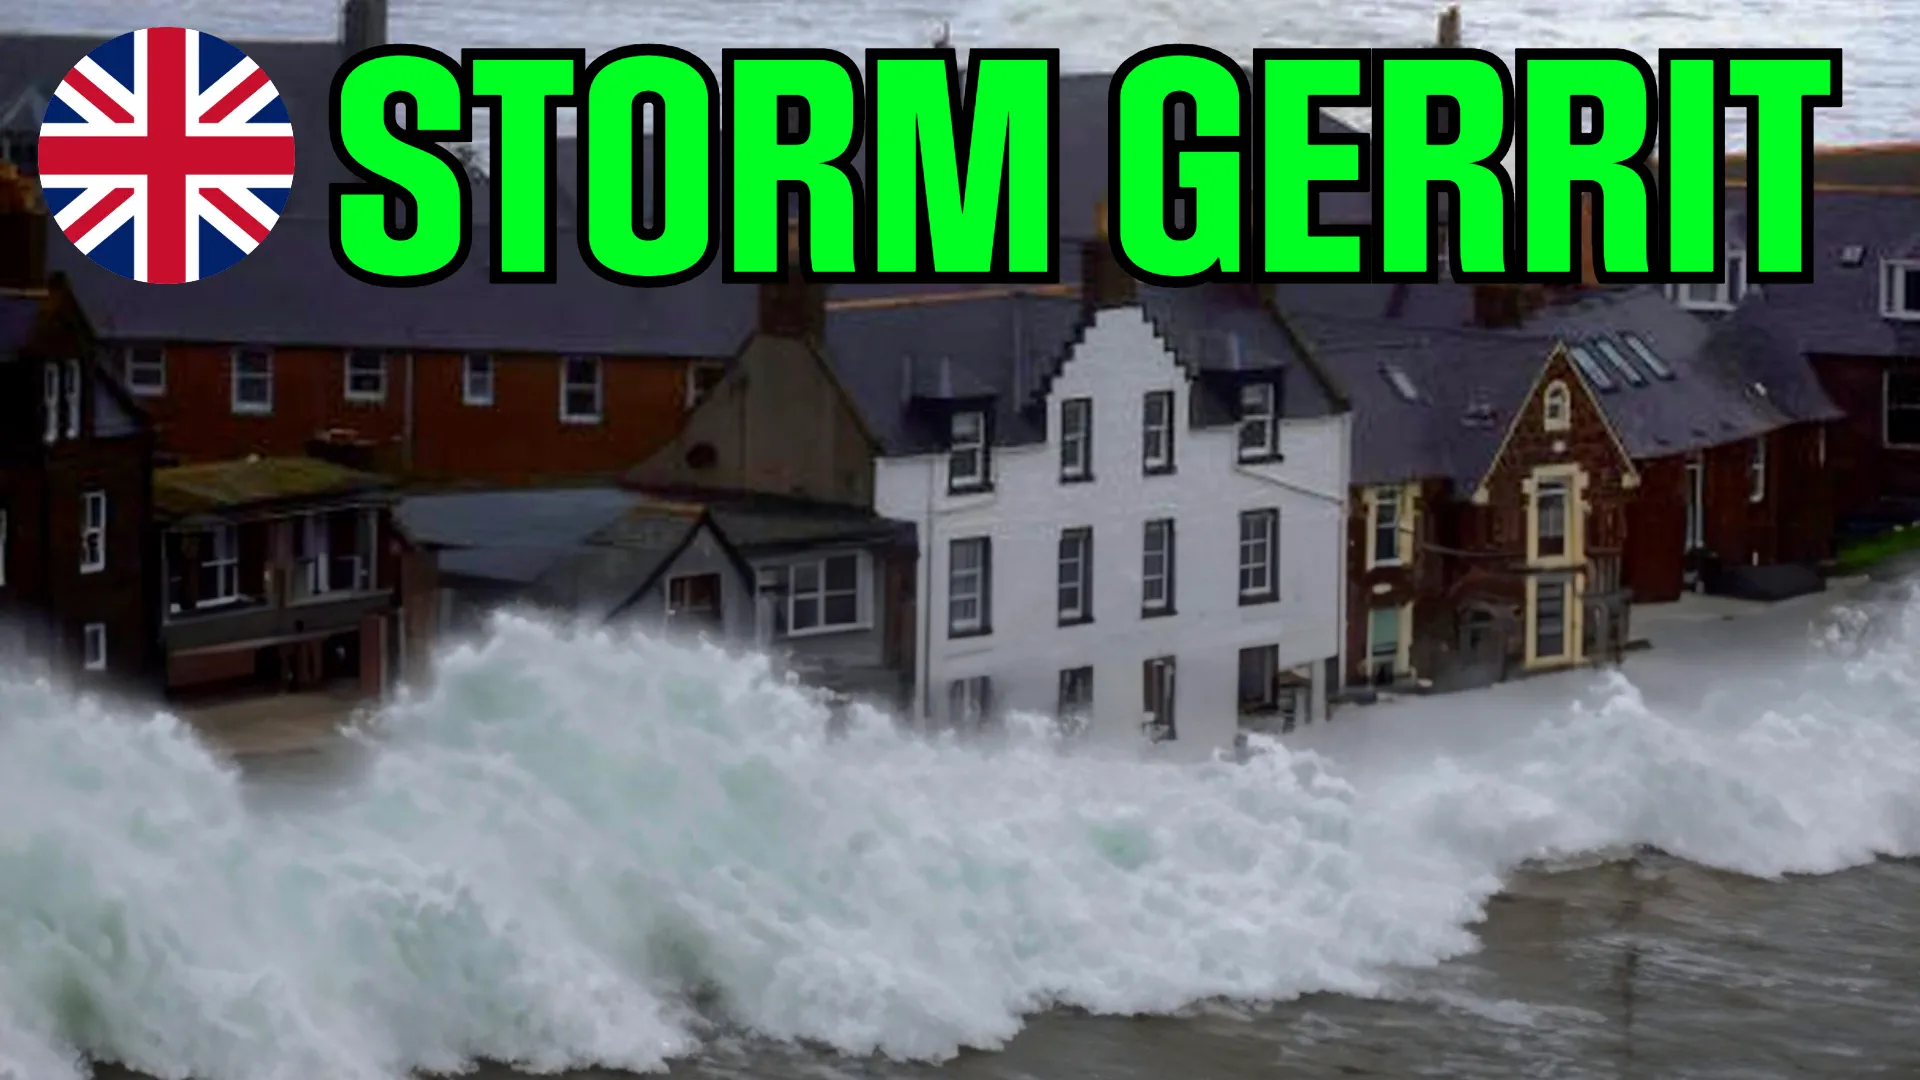 Storm Gerrit to hit Scotland & UK